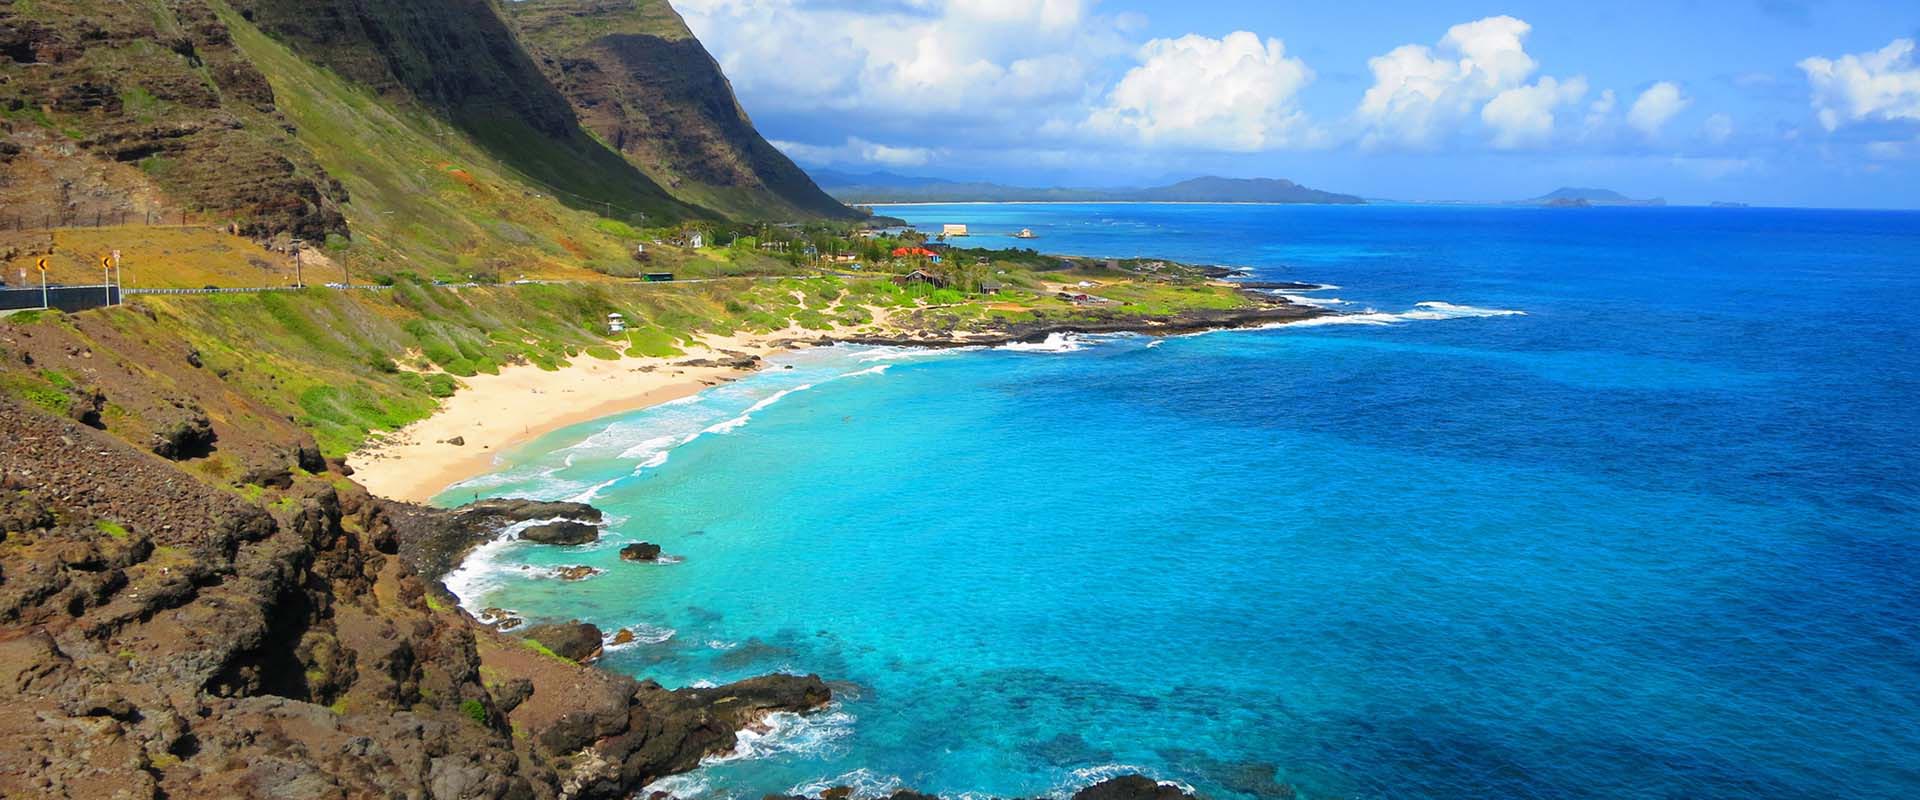 Hawaii State Holidays 2021